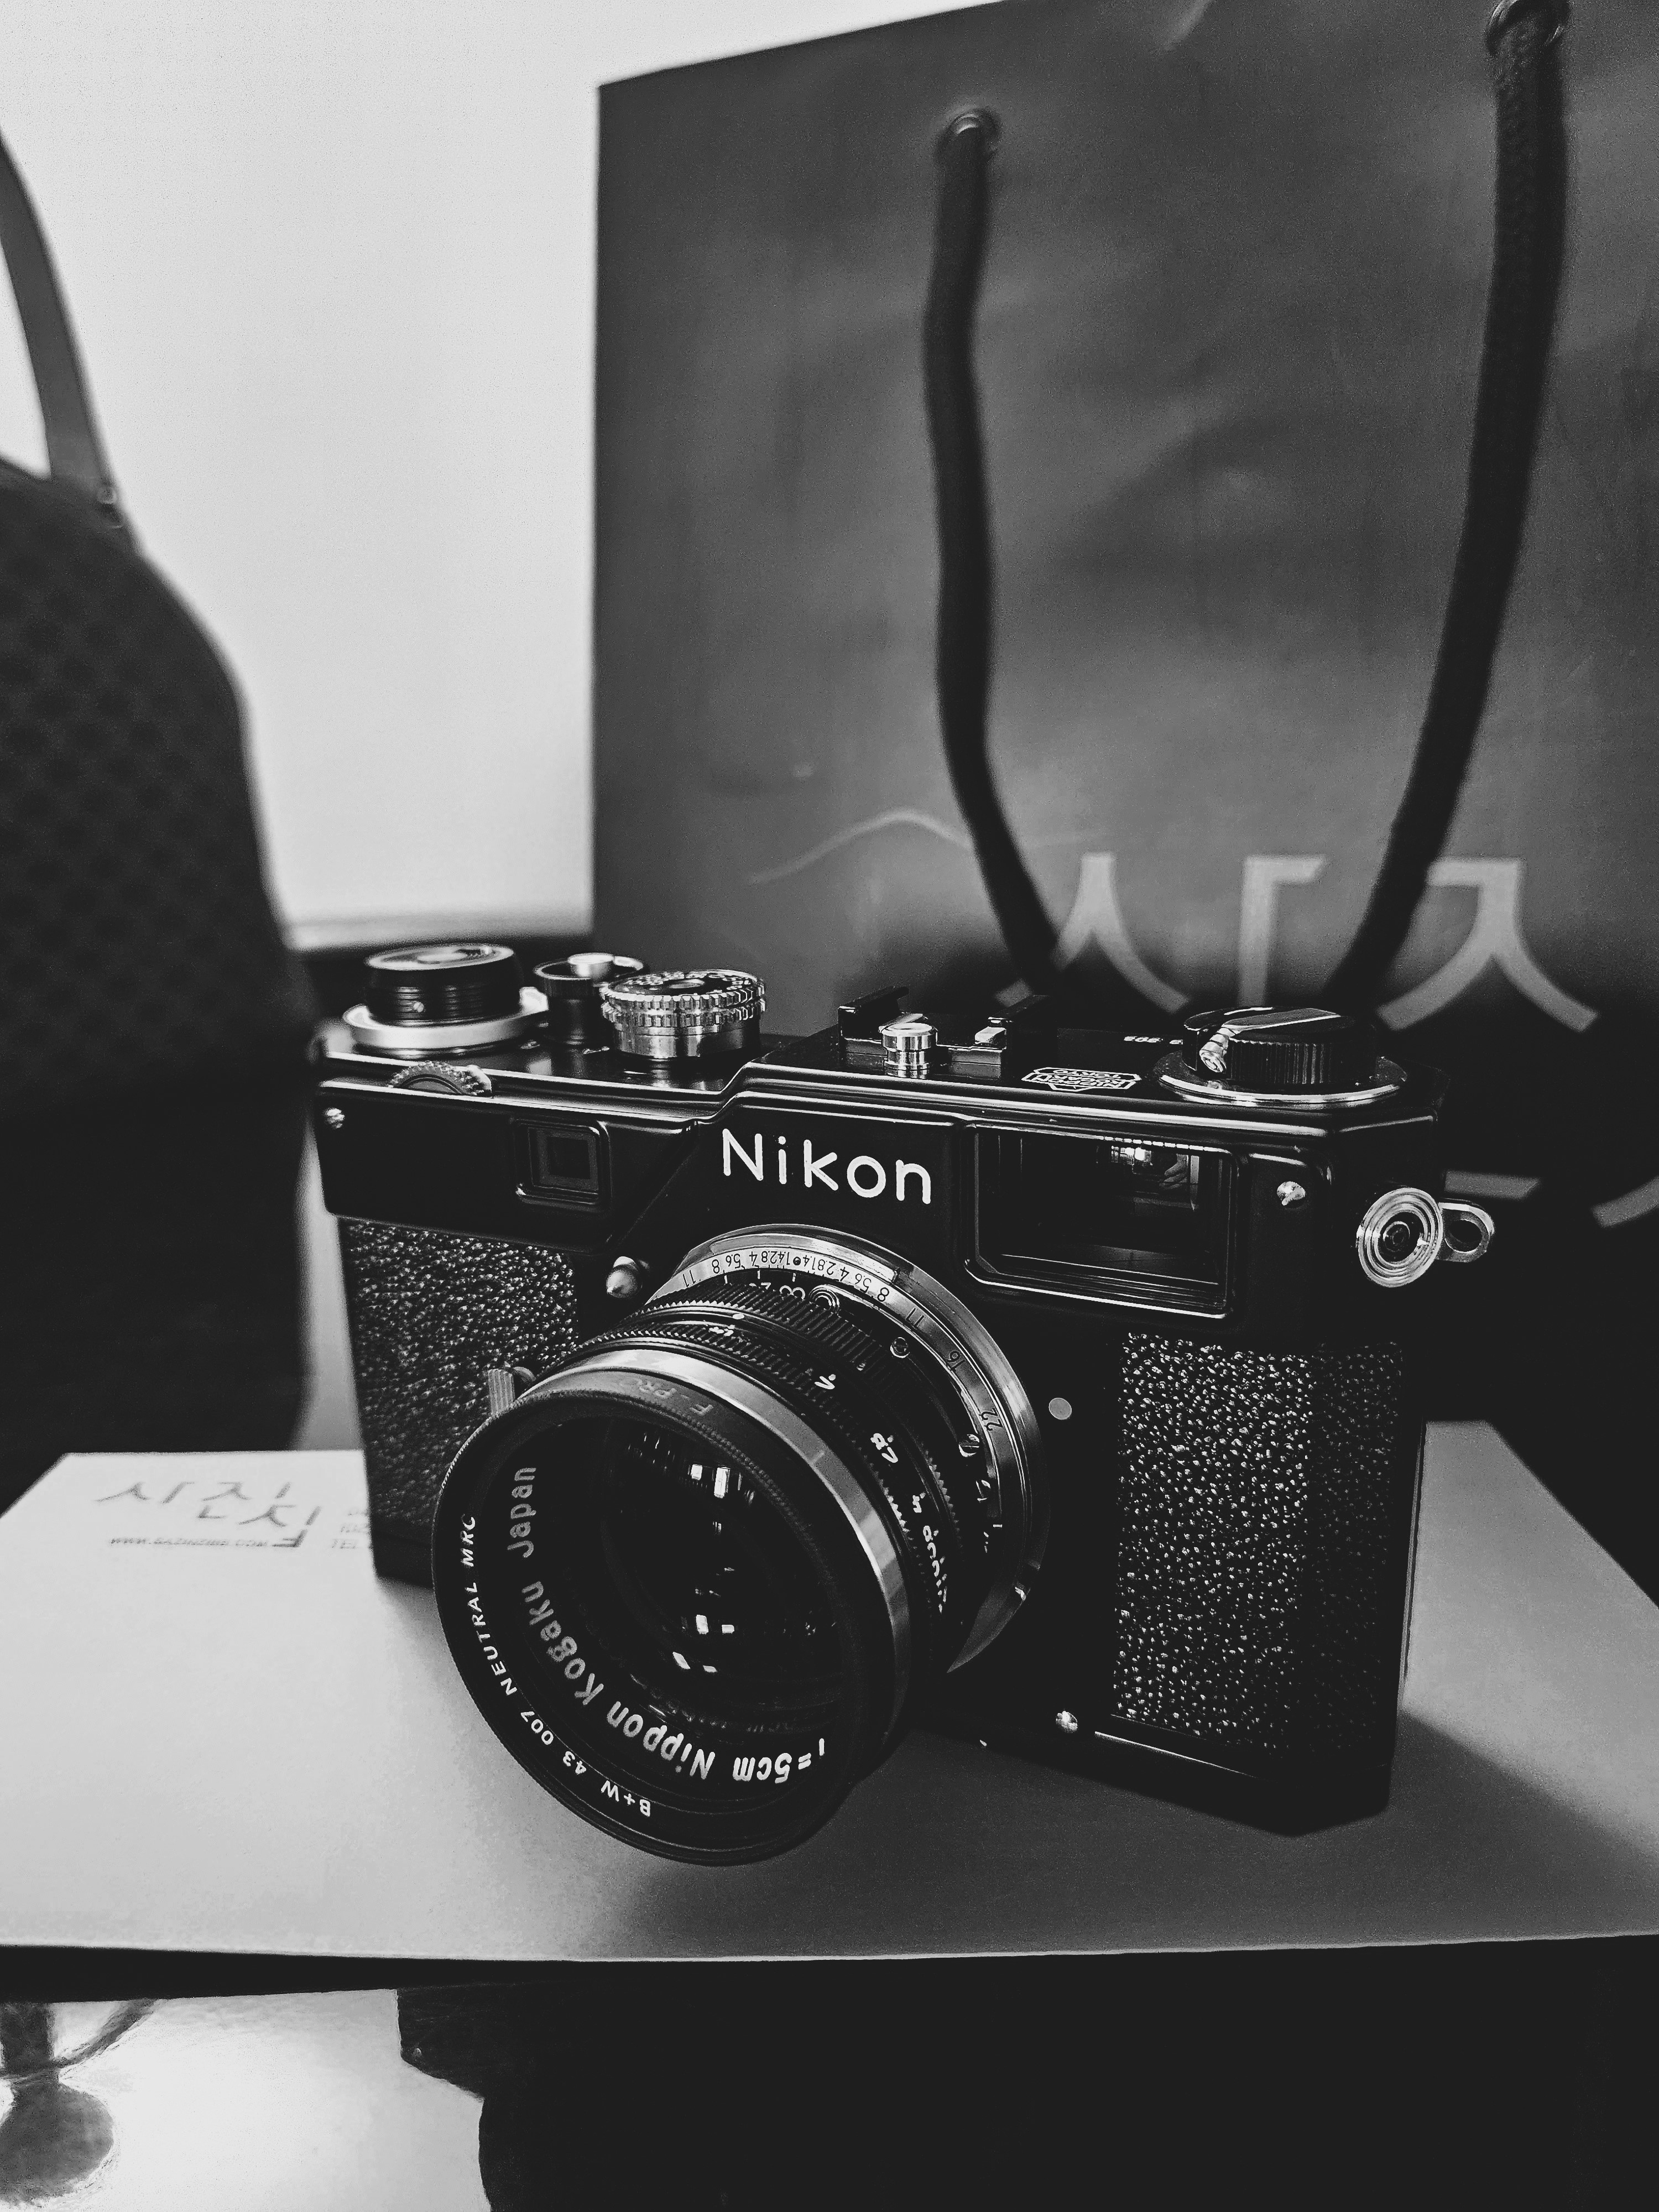 Nikon S3 2000 Limited Edition Black Paint